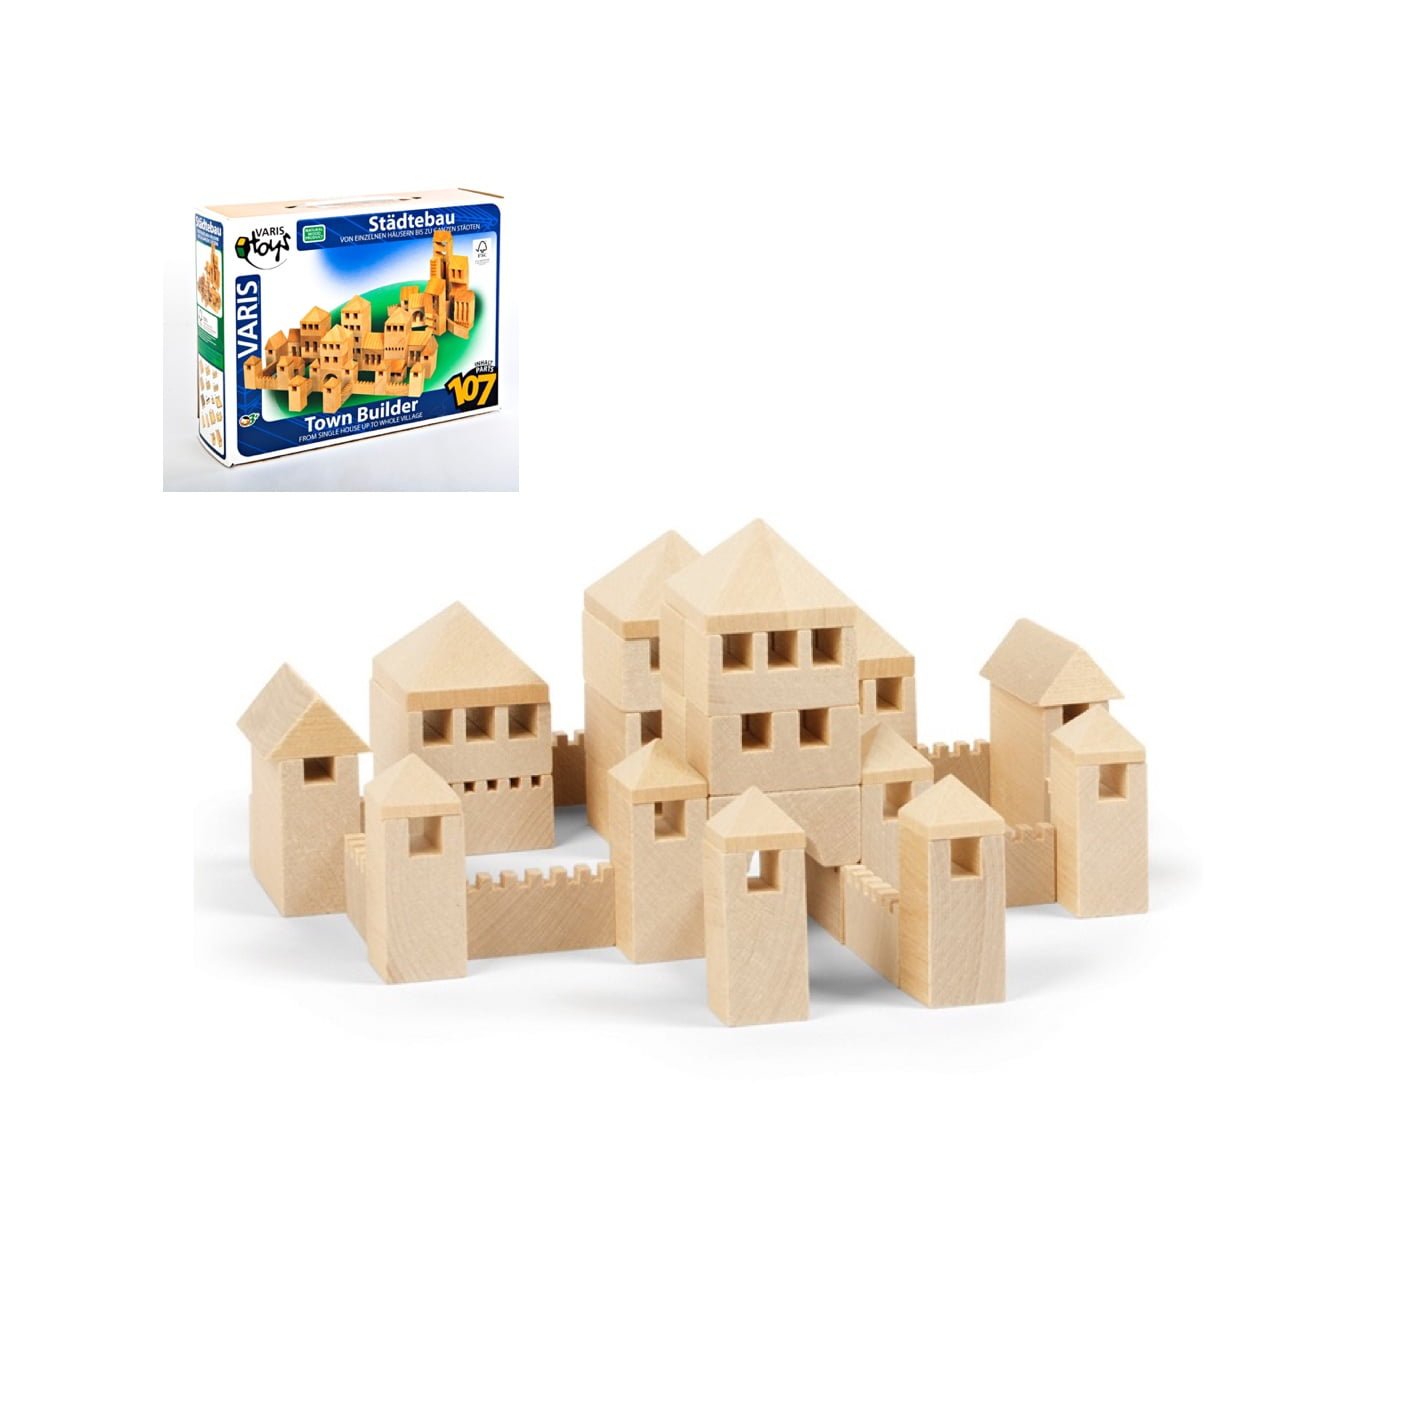 Varis Wooden blocks - Town Builder 107